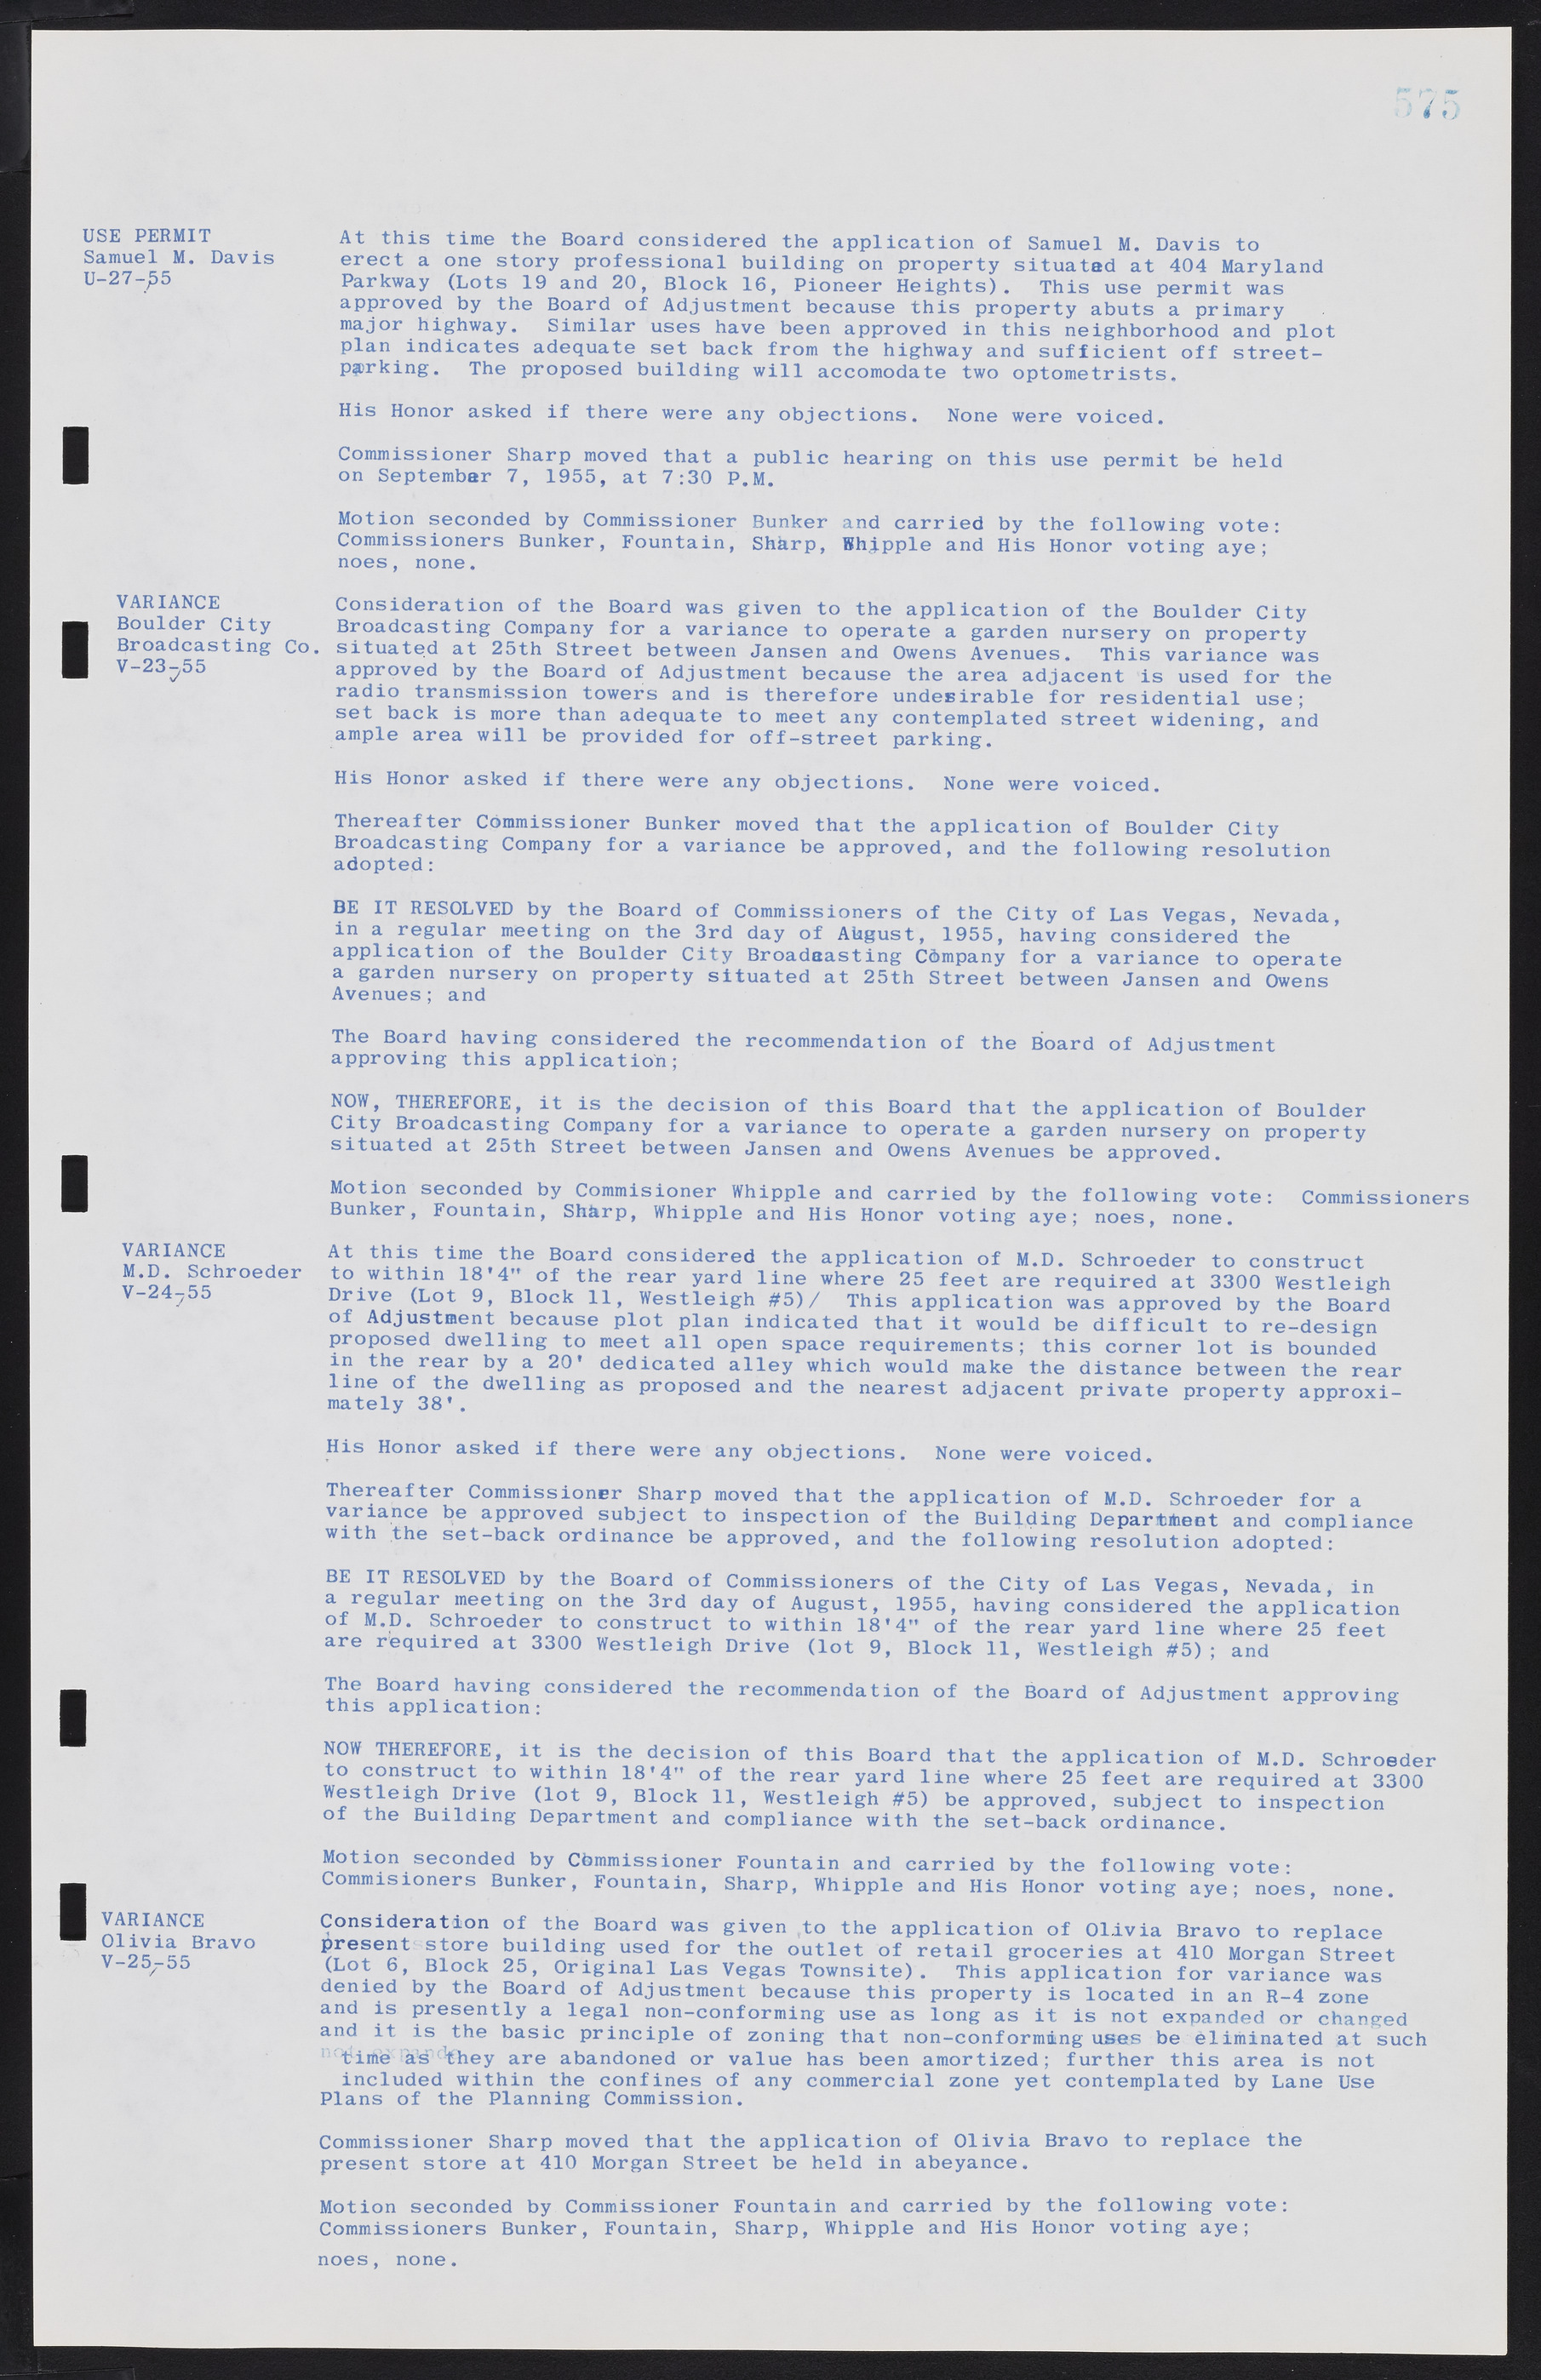 Las Vegas City Commission Minutes, February 17, 1954 to September 21, 1955, lvc000009-581